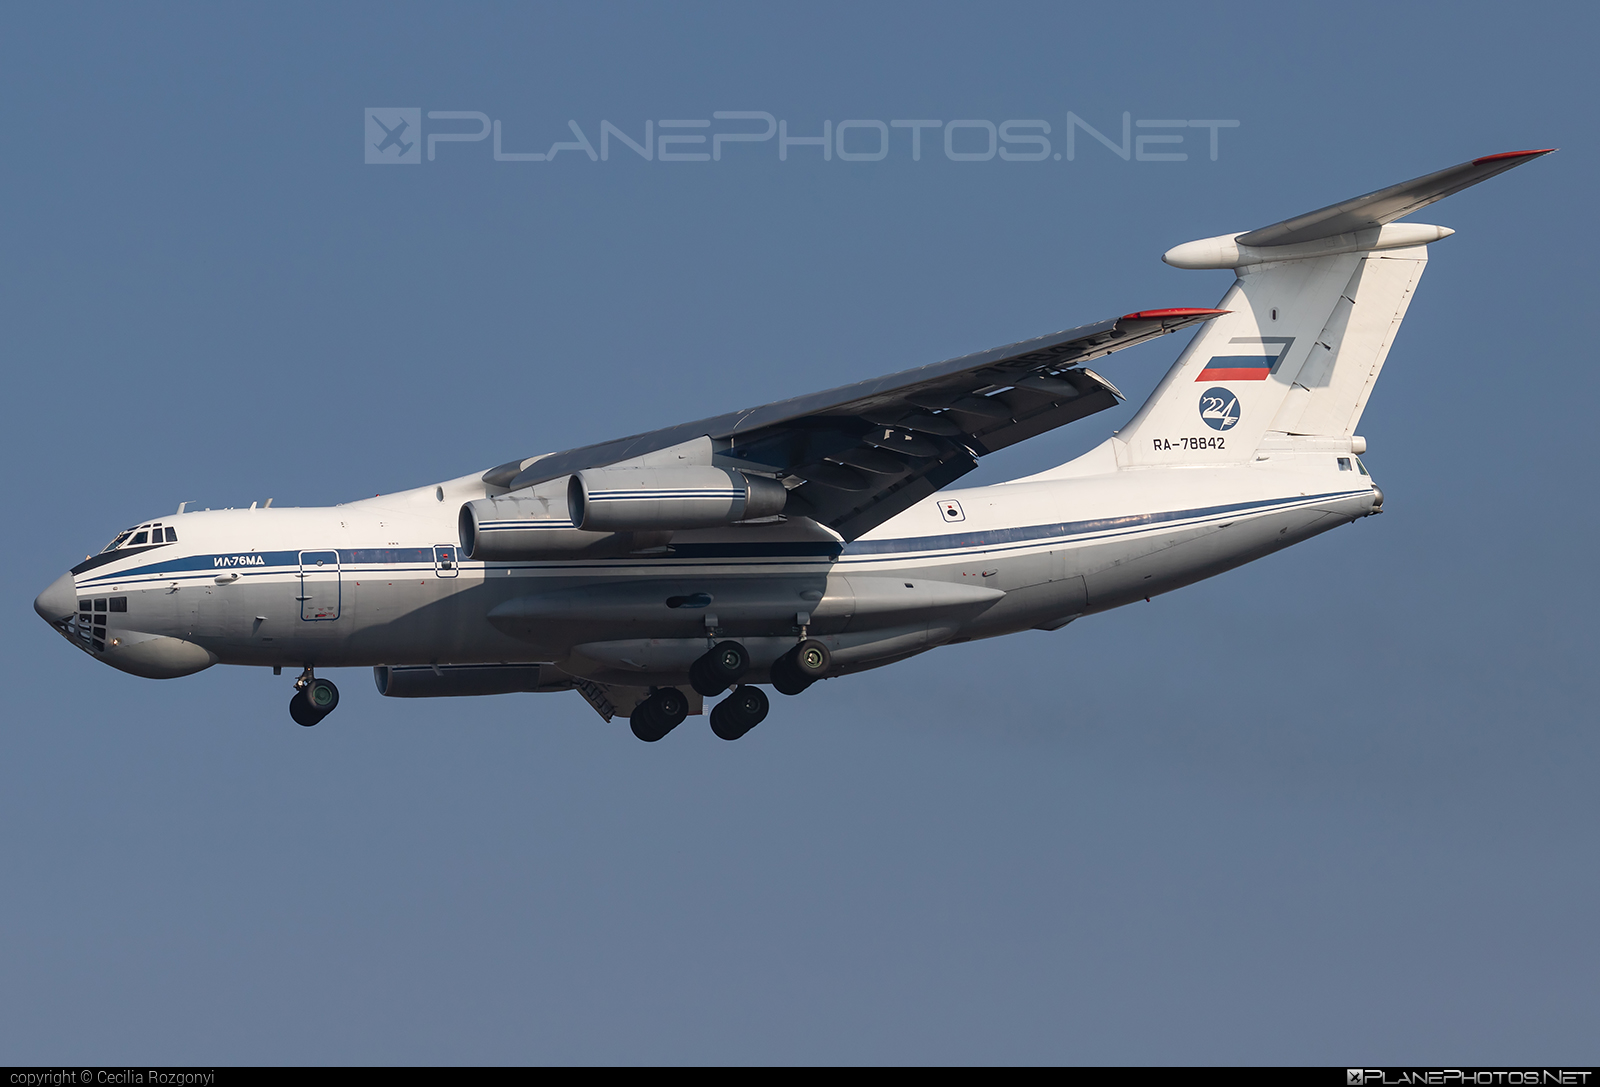 Ilyushin Il-76MD - RA-78842 operated by Voyenno-vozdushnye sily Rossii (Russian Air Force) #il76 #il76md #ilyushin